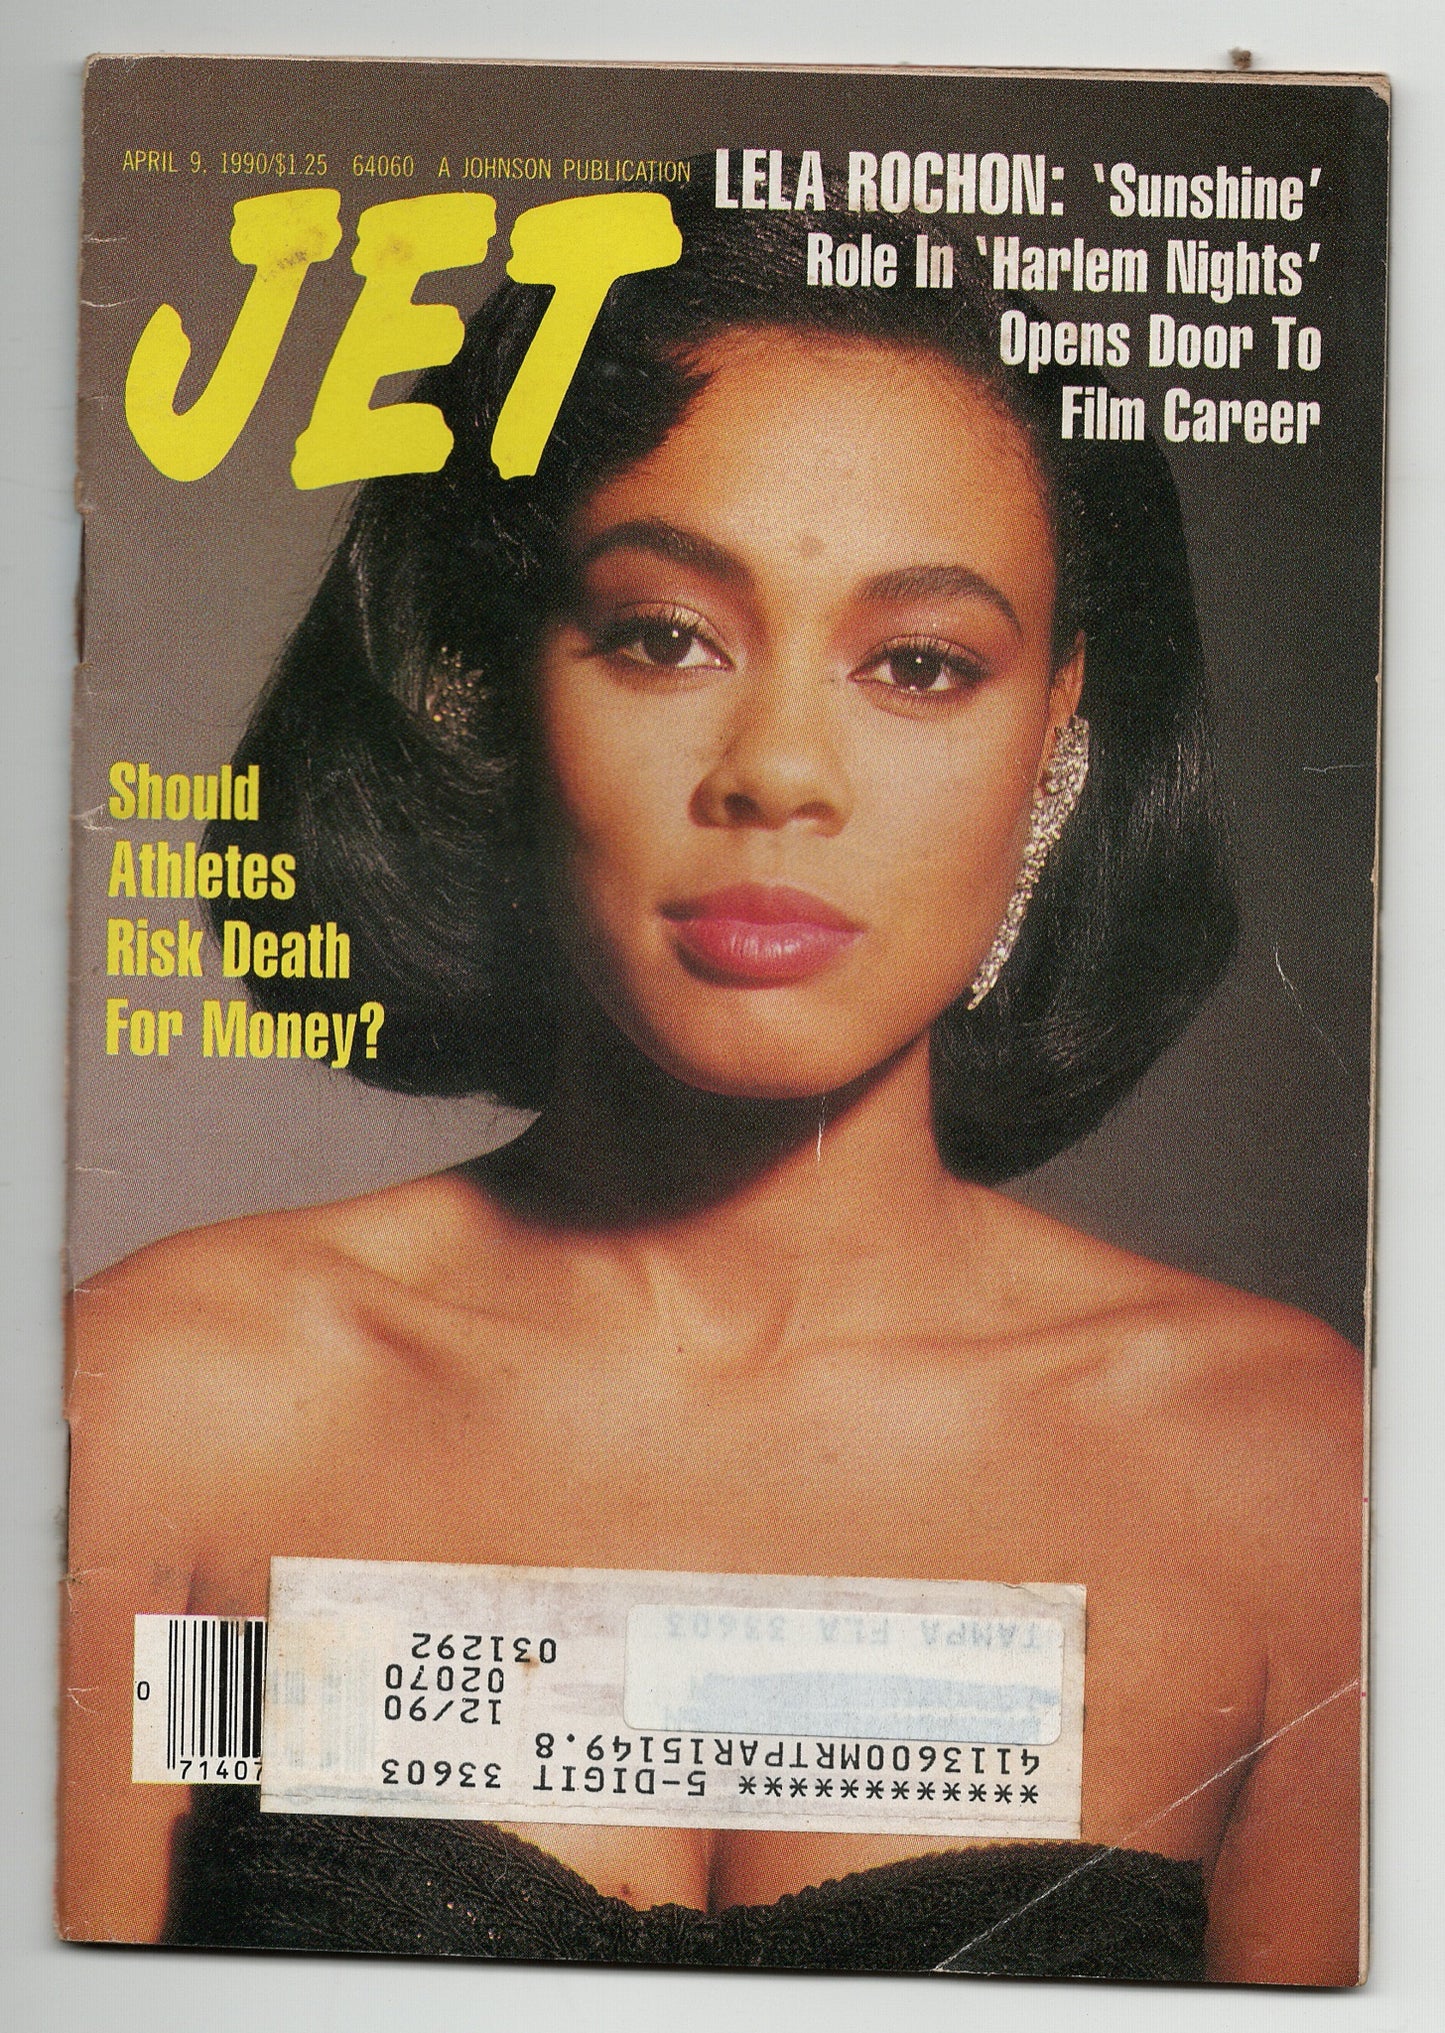 04 09 1990 Jet Magazine Lela Rochon "Harlem Nights"